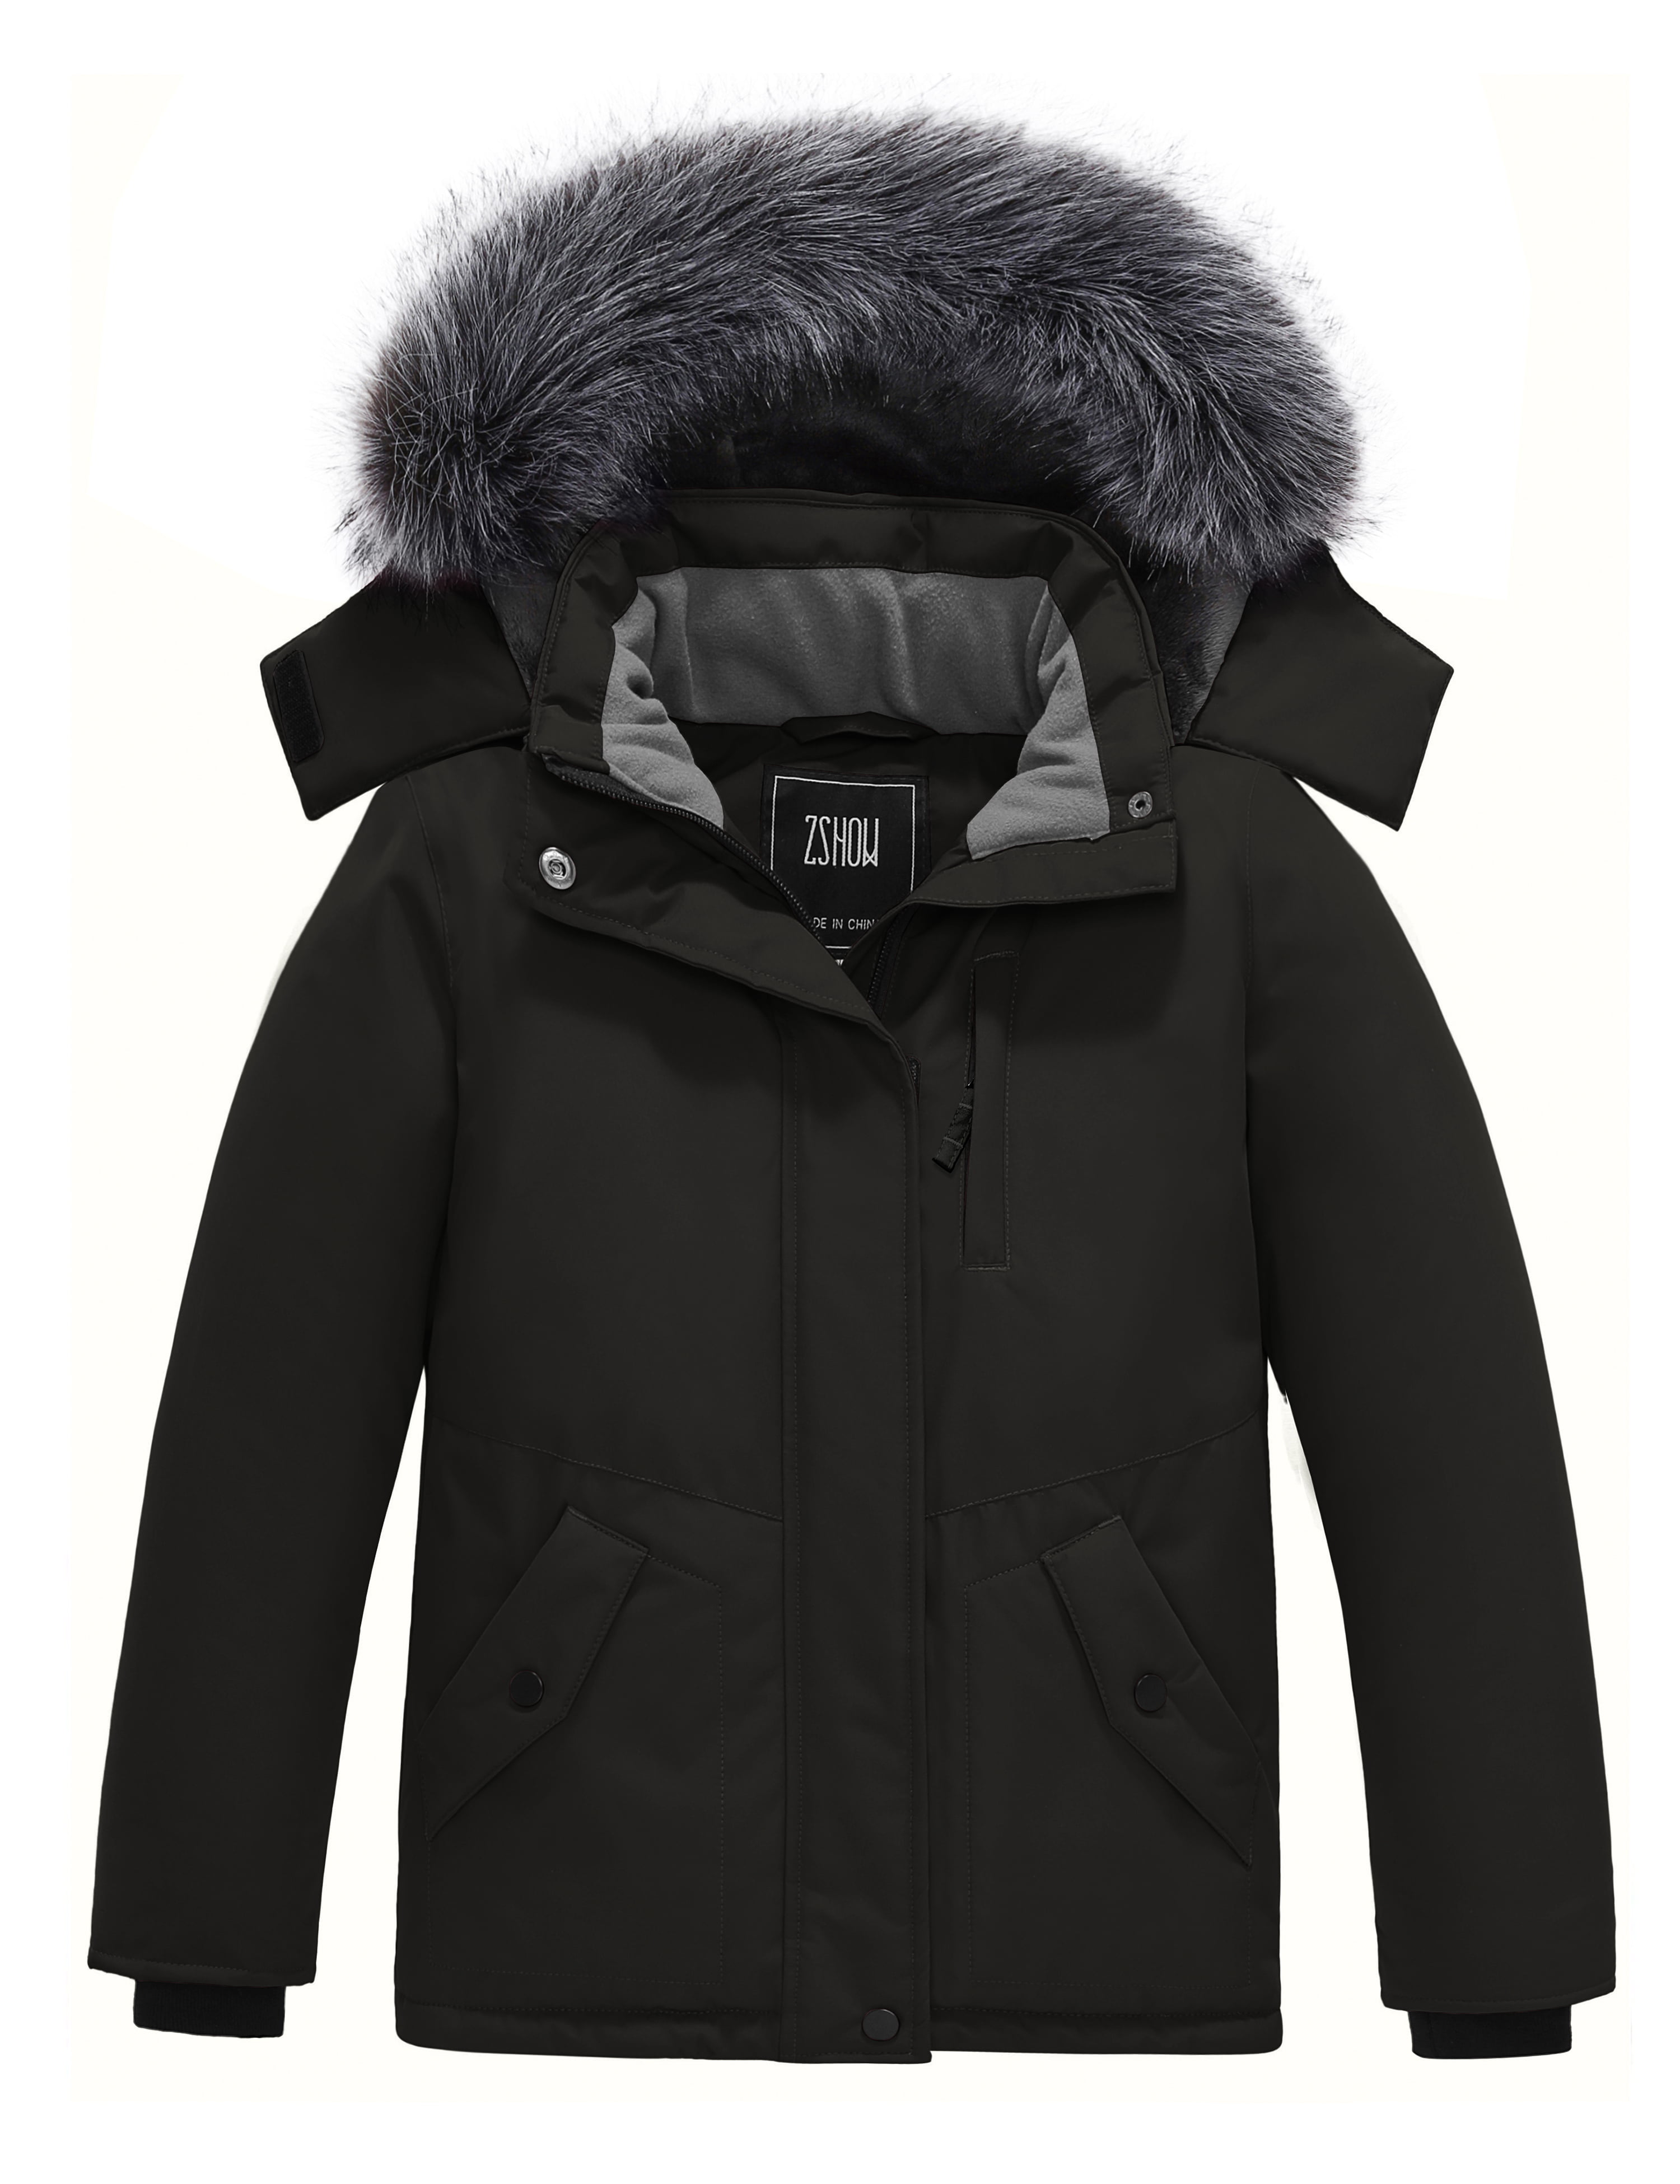 ZSHOW Girls' Water Resistant Winter Coat Soft Fleece Lined Cotton Padded Puffer Jacket 